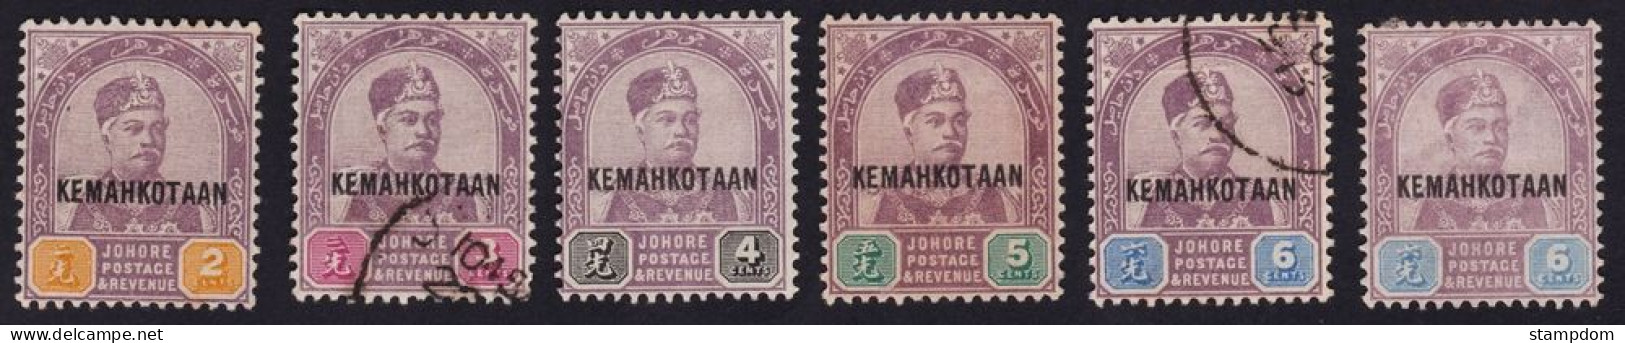 JOHORE 1896 Overprints Kemahkotaan Short Set  Sc#31.35 2c-6c MH, 3c+6c USED @P949 - Johore